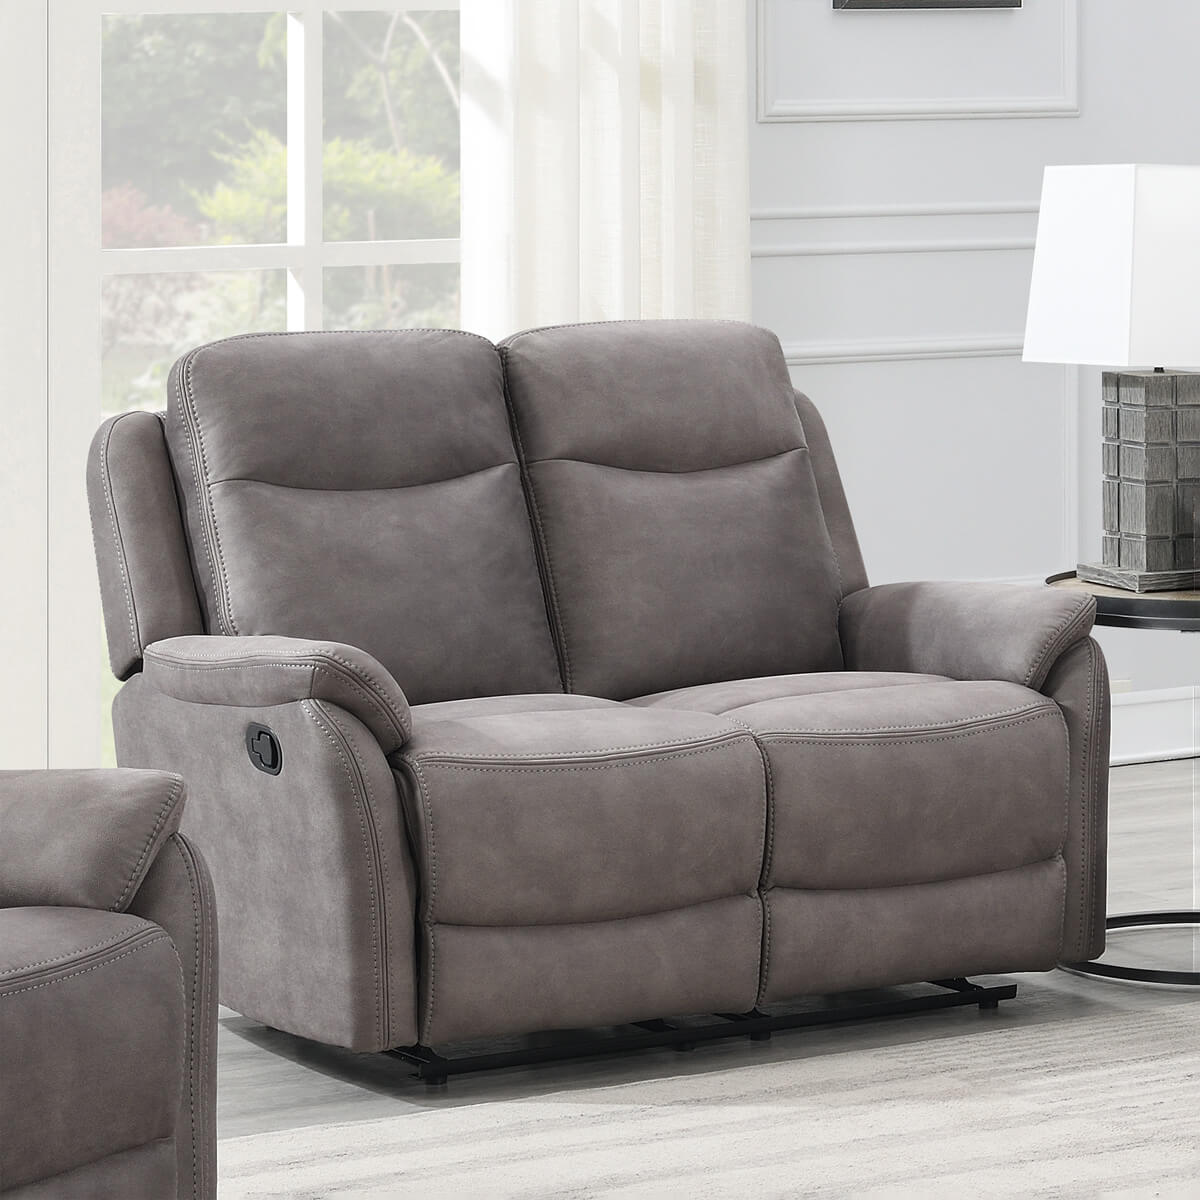 Evander 2 Seater Sofa - Grey